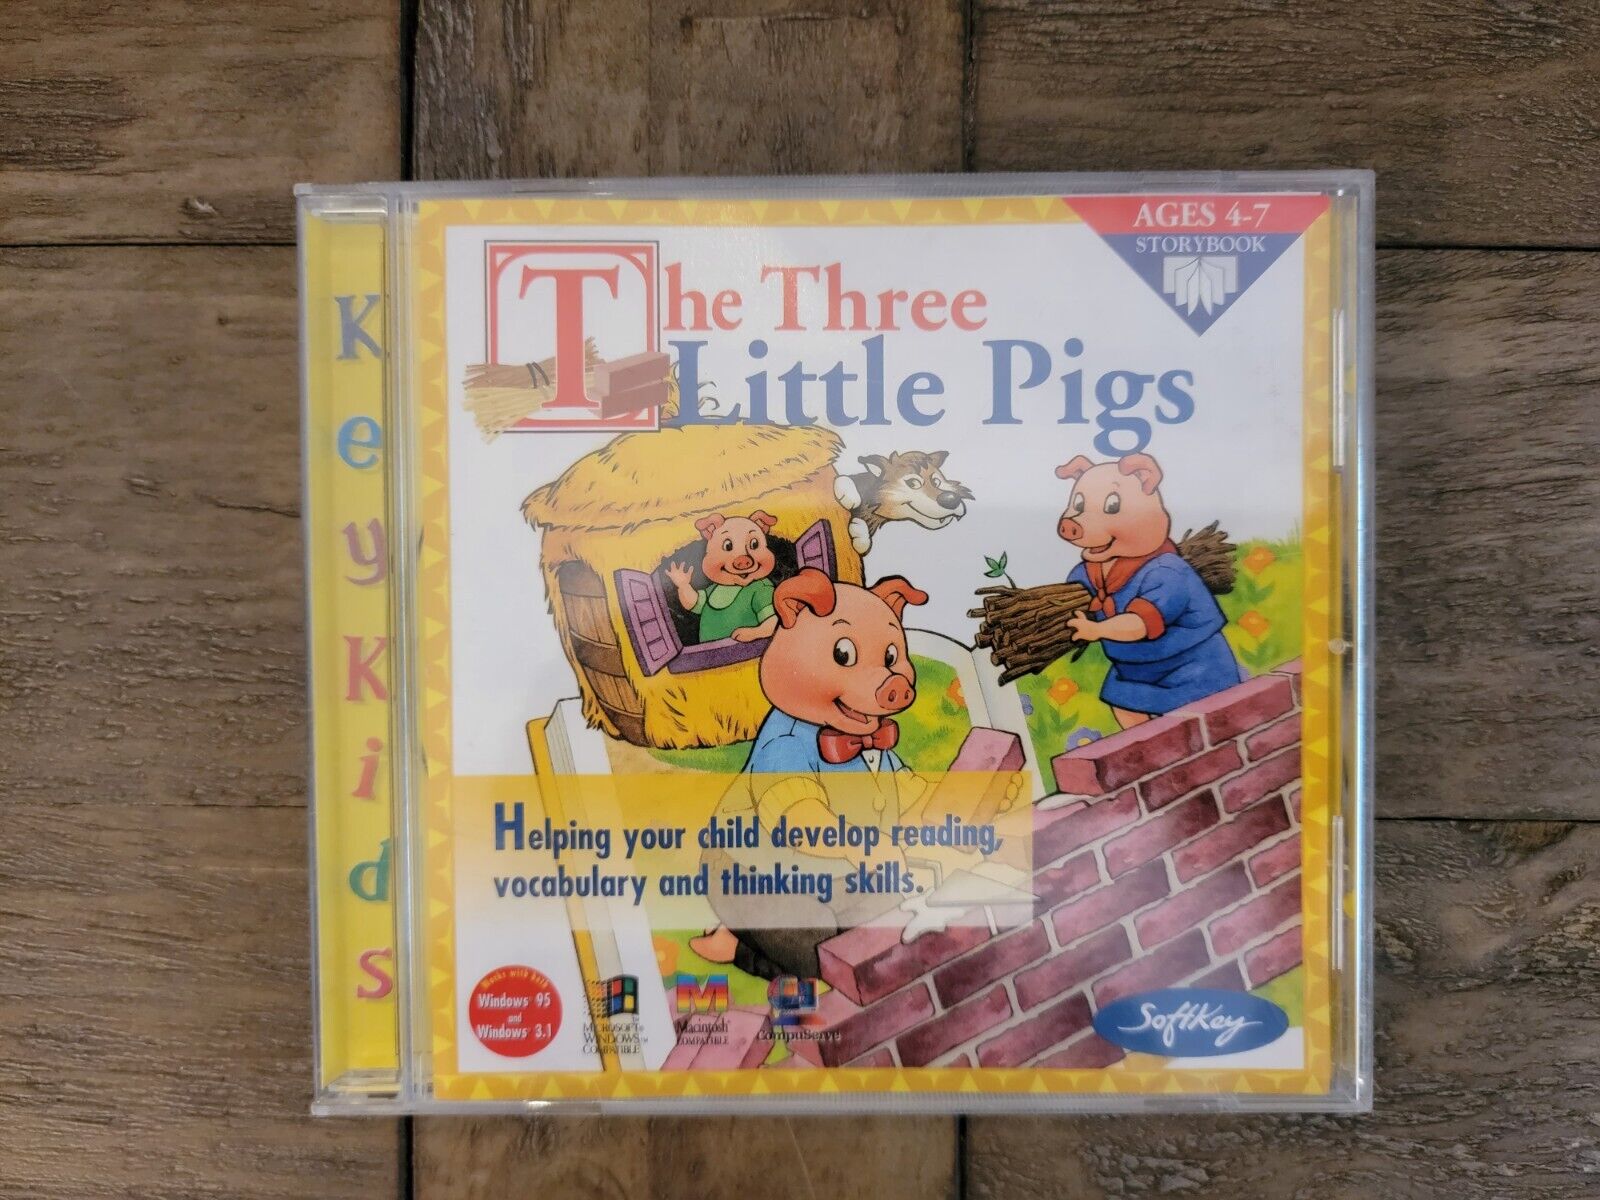 PC MAC CD-ROM The Three Little Pigs SoftKey Storybook 1996 Vintage PC Game